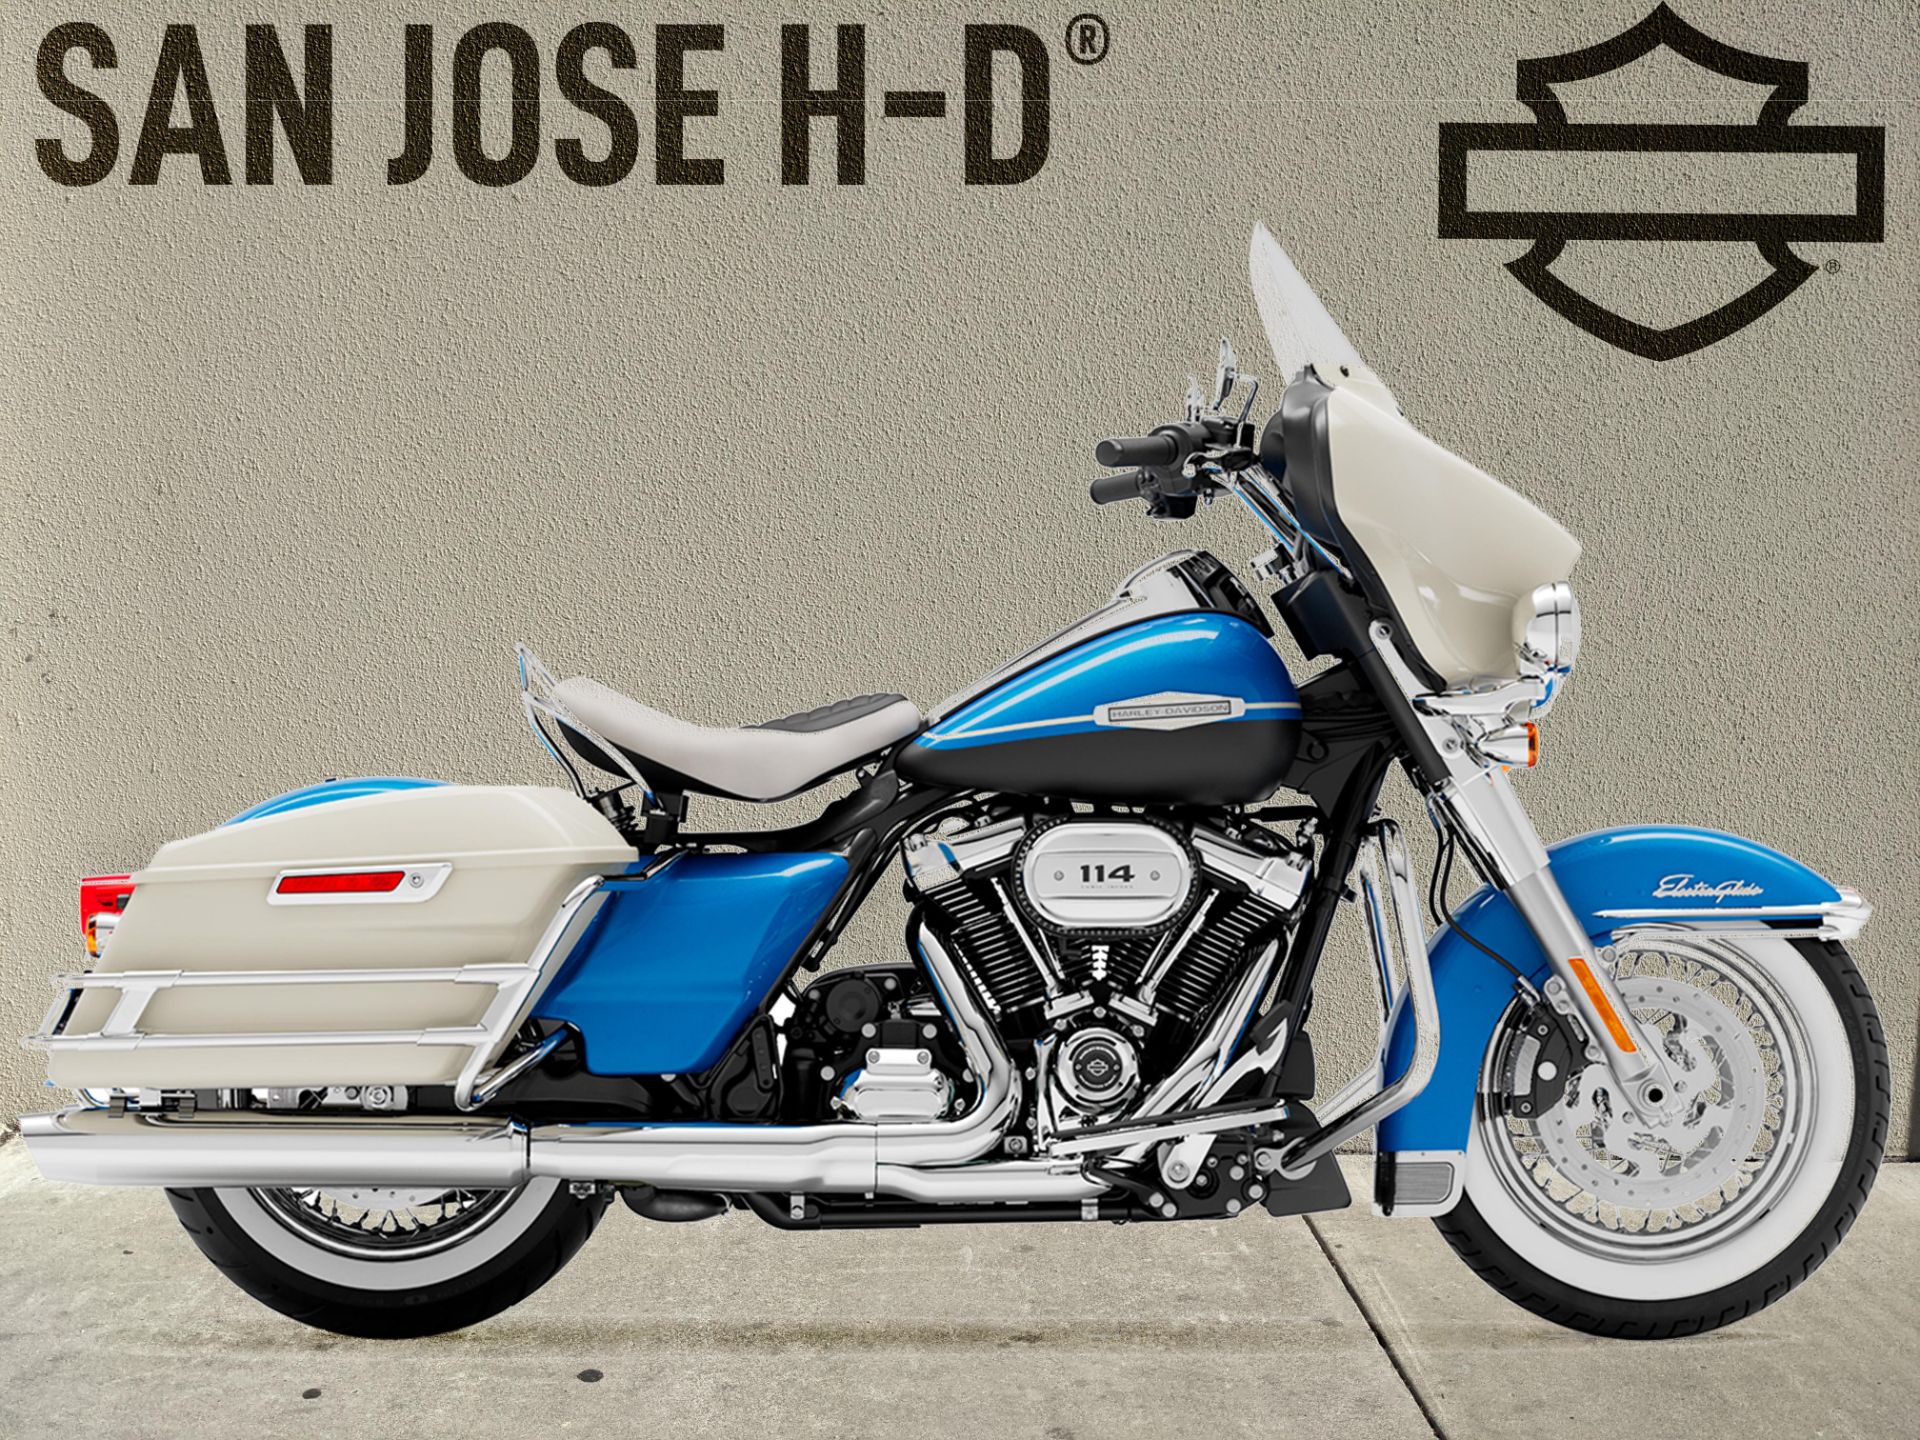 New 2021 Harley Davidson Electra Glide Revival Hi Fi Blue Birch White Motorcycles In San Jose Ca N629316